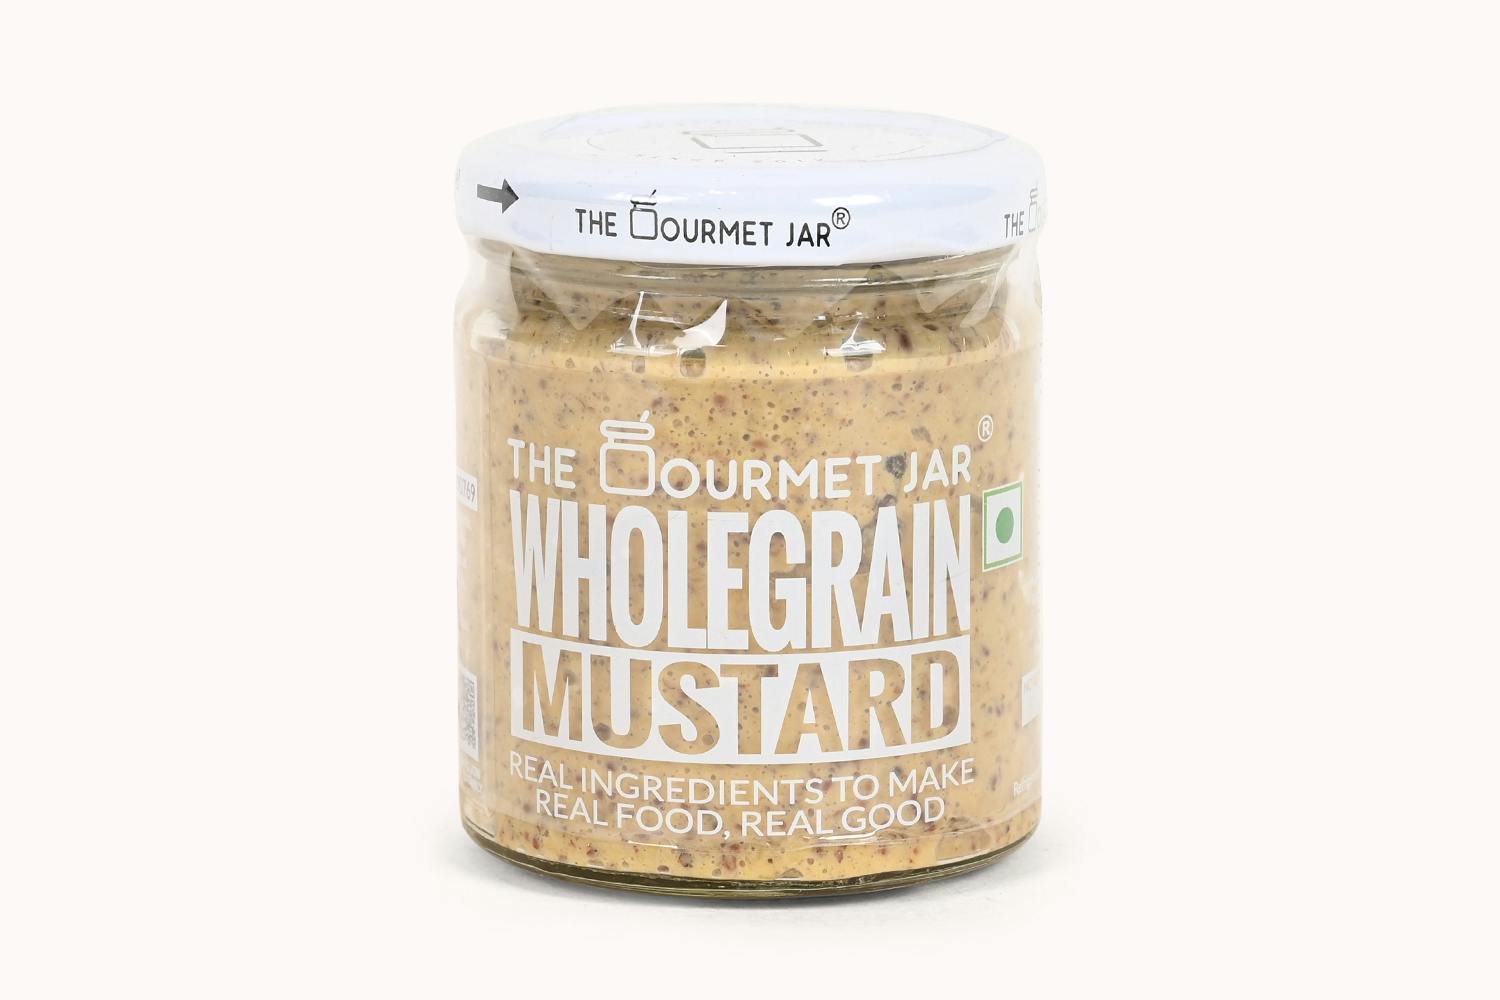 The Gourmet Jar Wholegrain Mustard